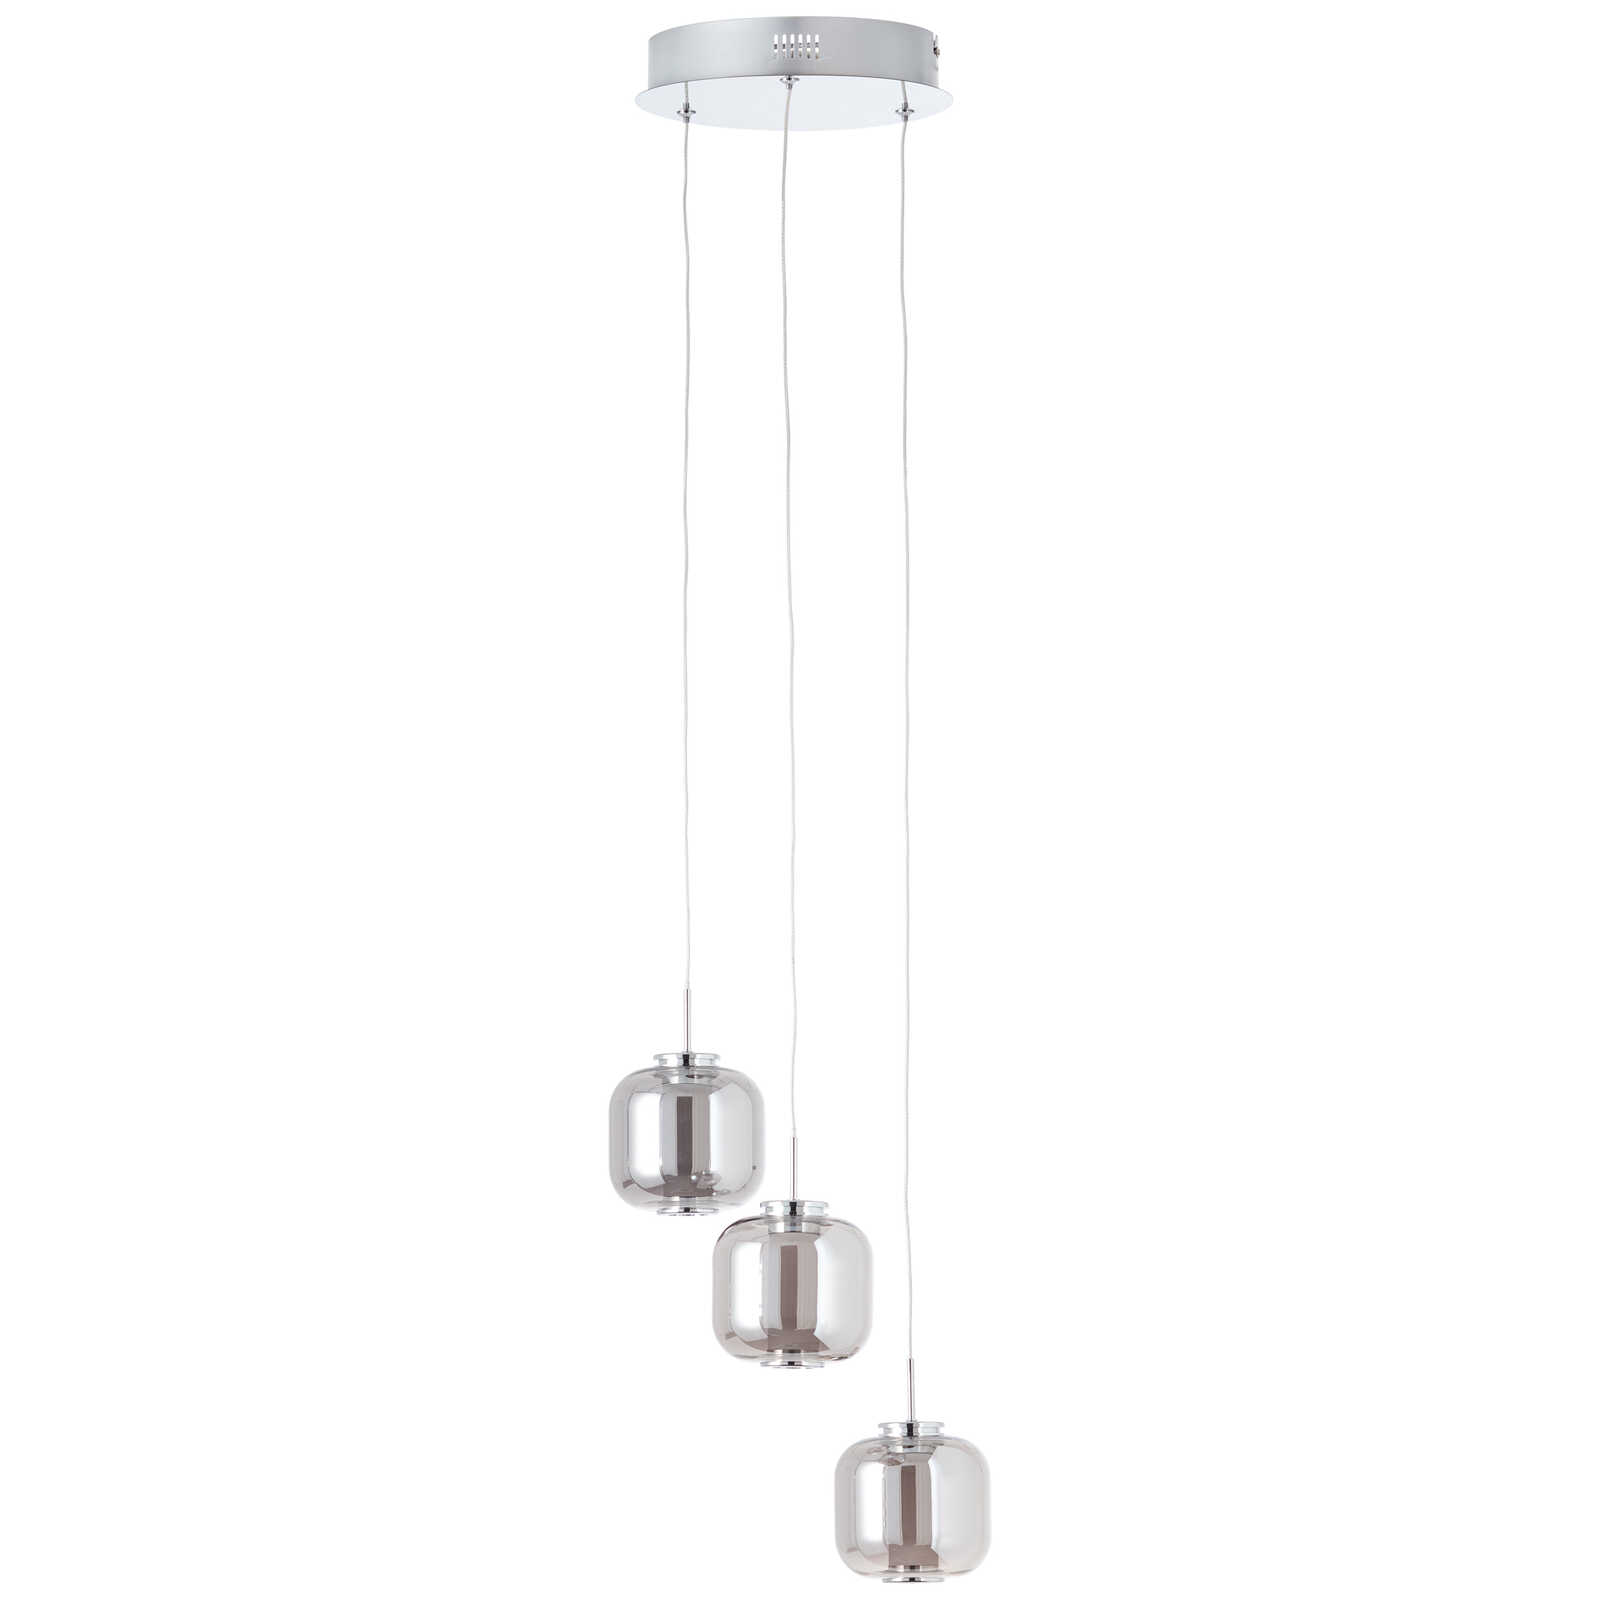             Glass pendant light - Martin 2 - Grey
        